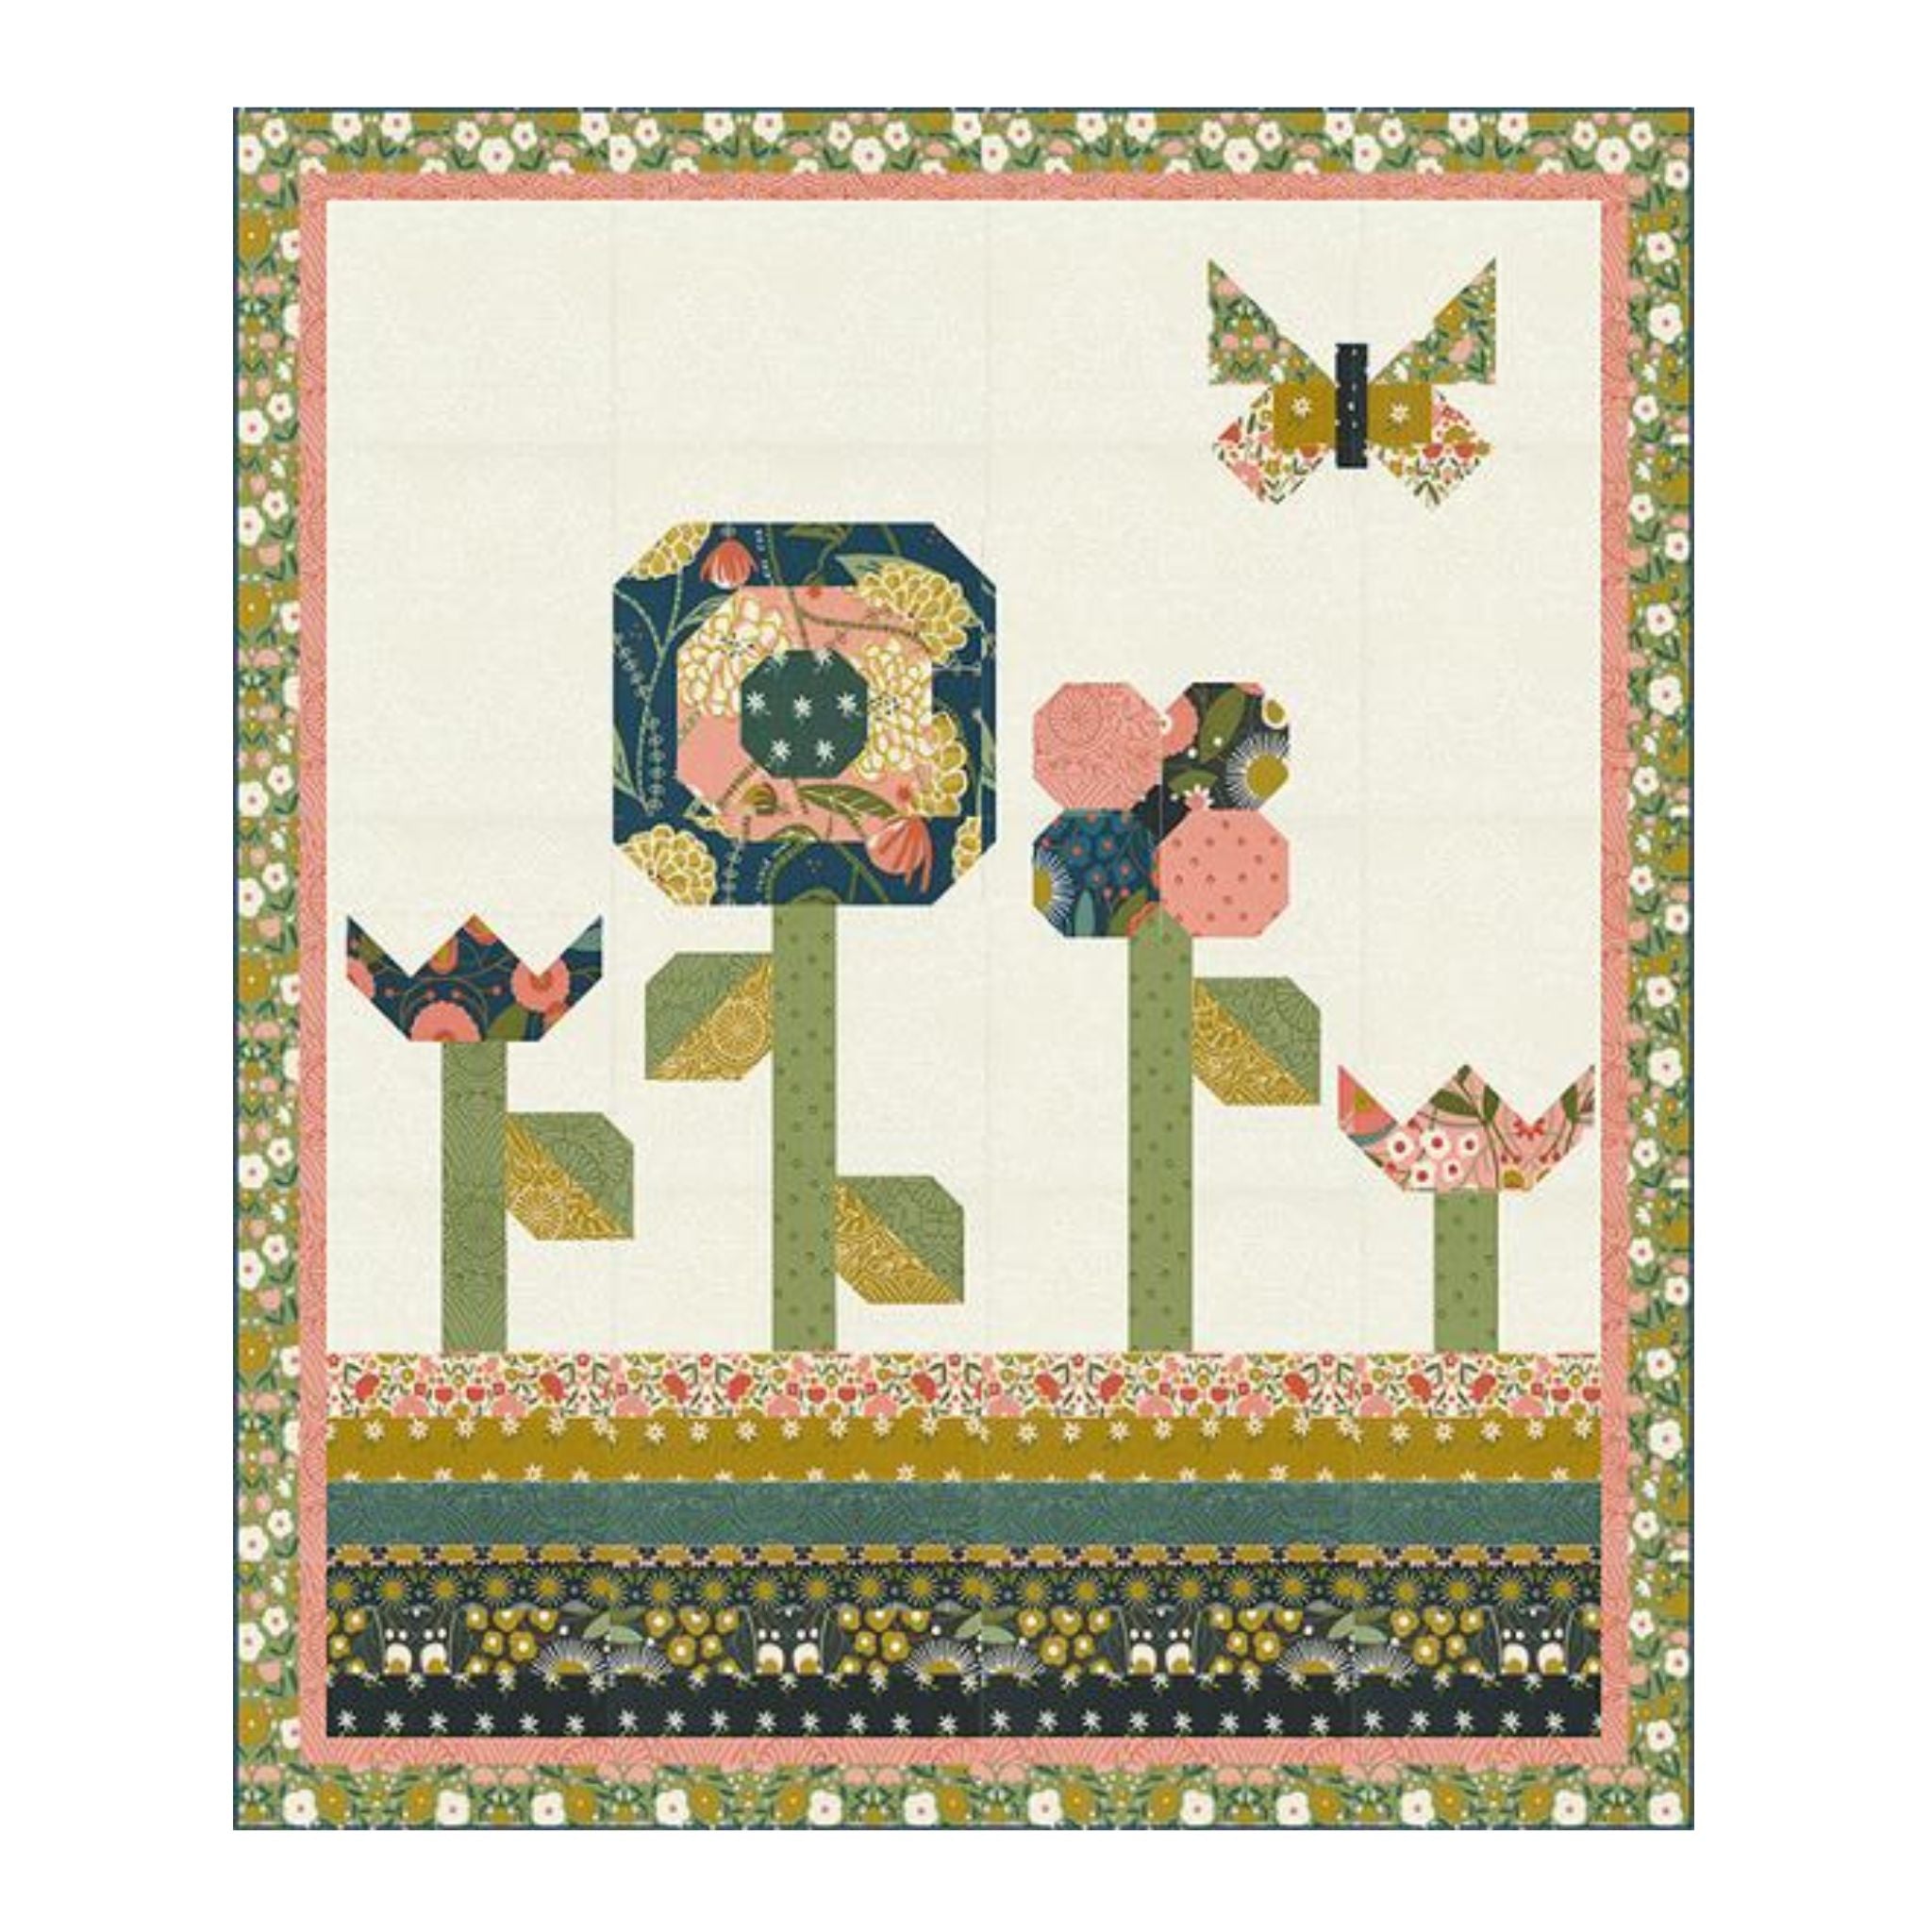 Magic Garden quilt kit - Imaginary flowers by Moda